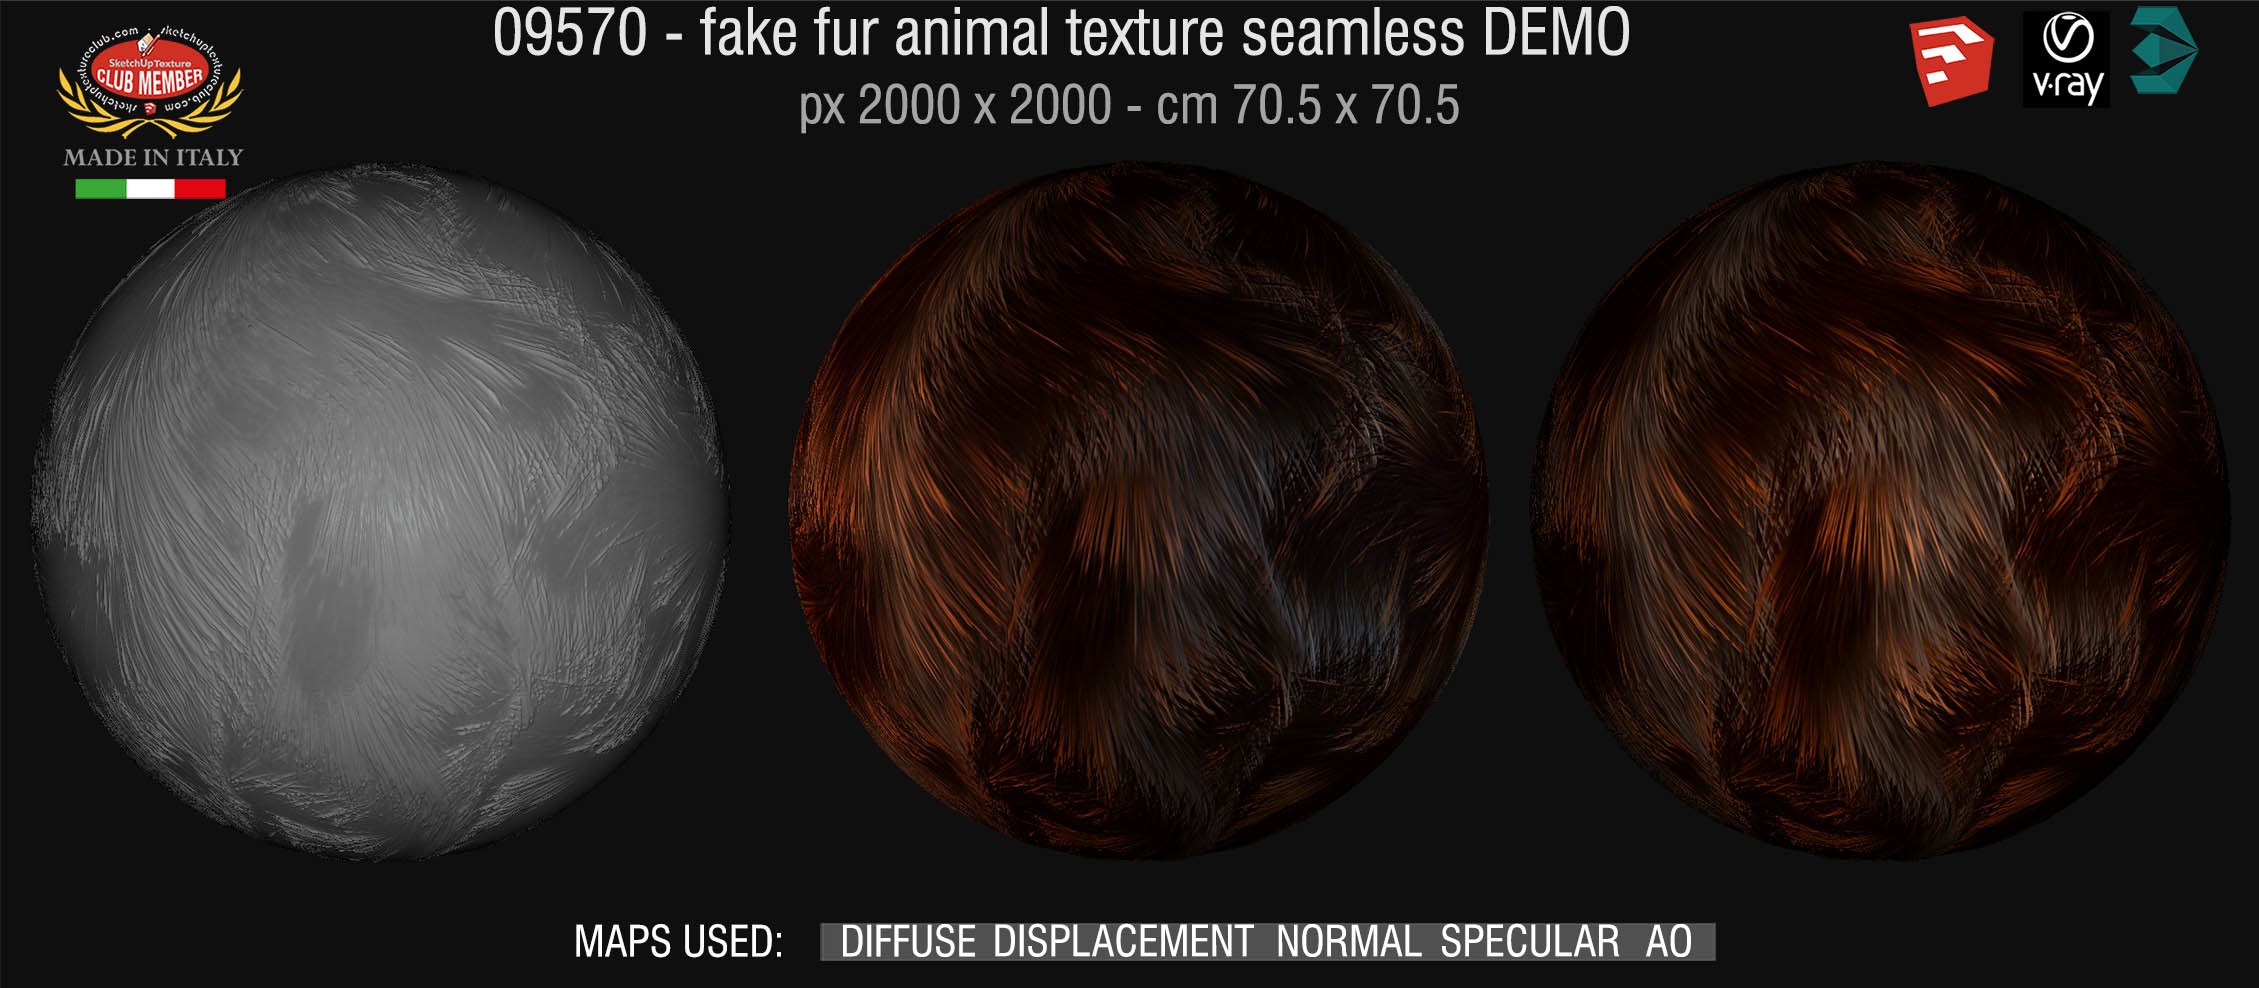 09570 HR fake fur animal texture + maps DEMO